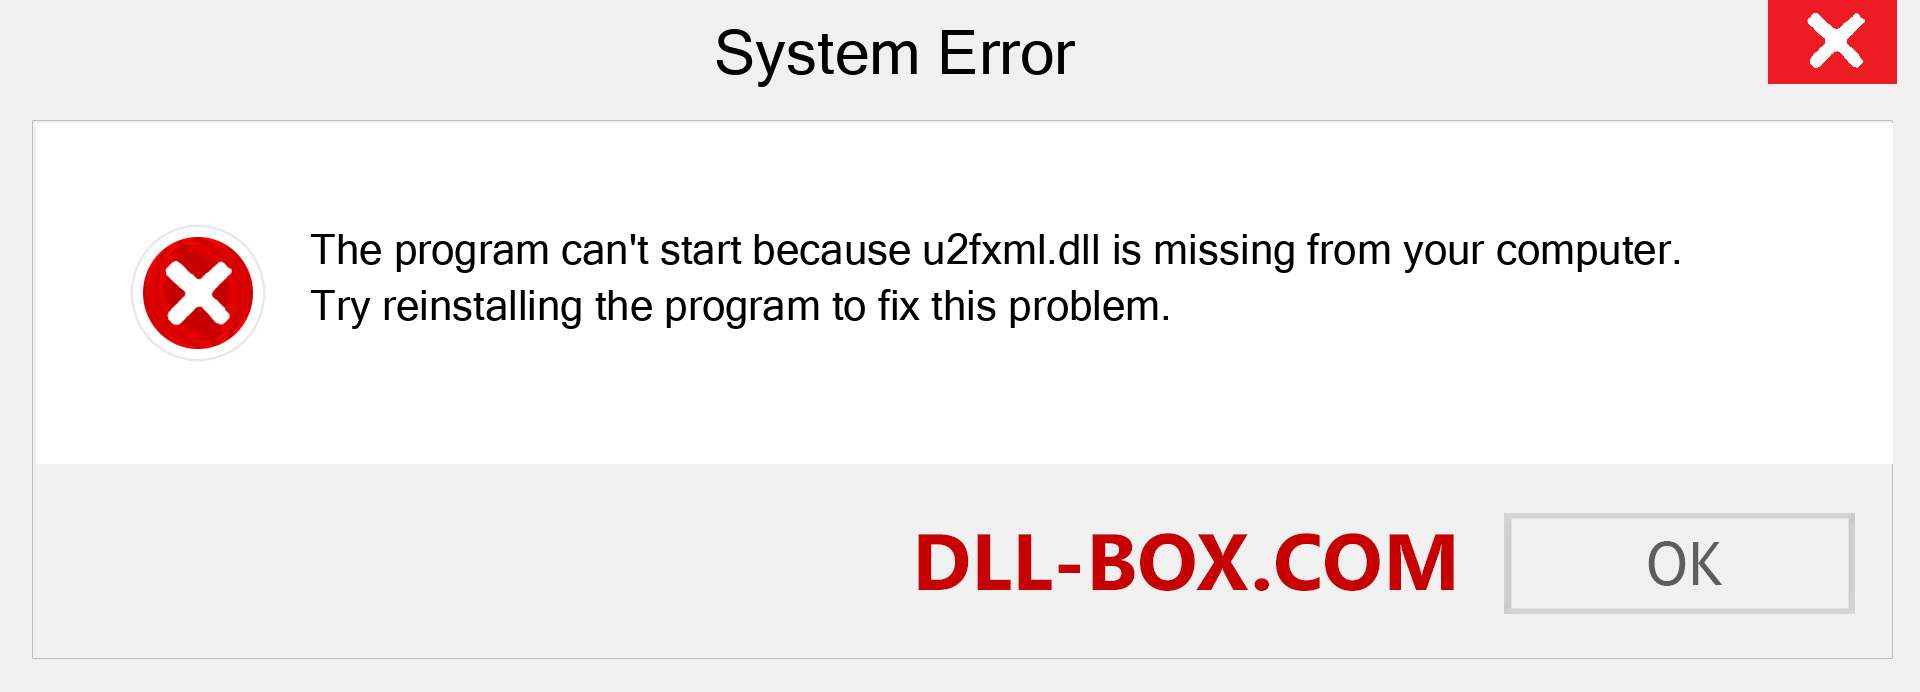  u2fxml.dll file is missing?. Download for Windows 7, 8, 10 - Fix  u2fxml dll Missing Error on Windows, photos, images